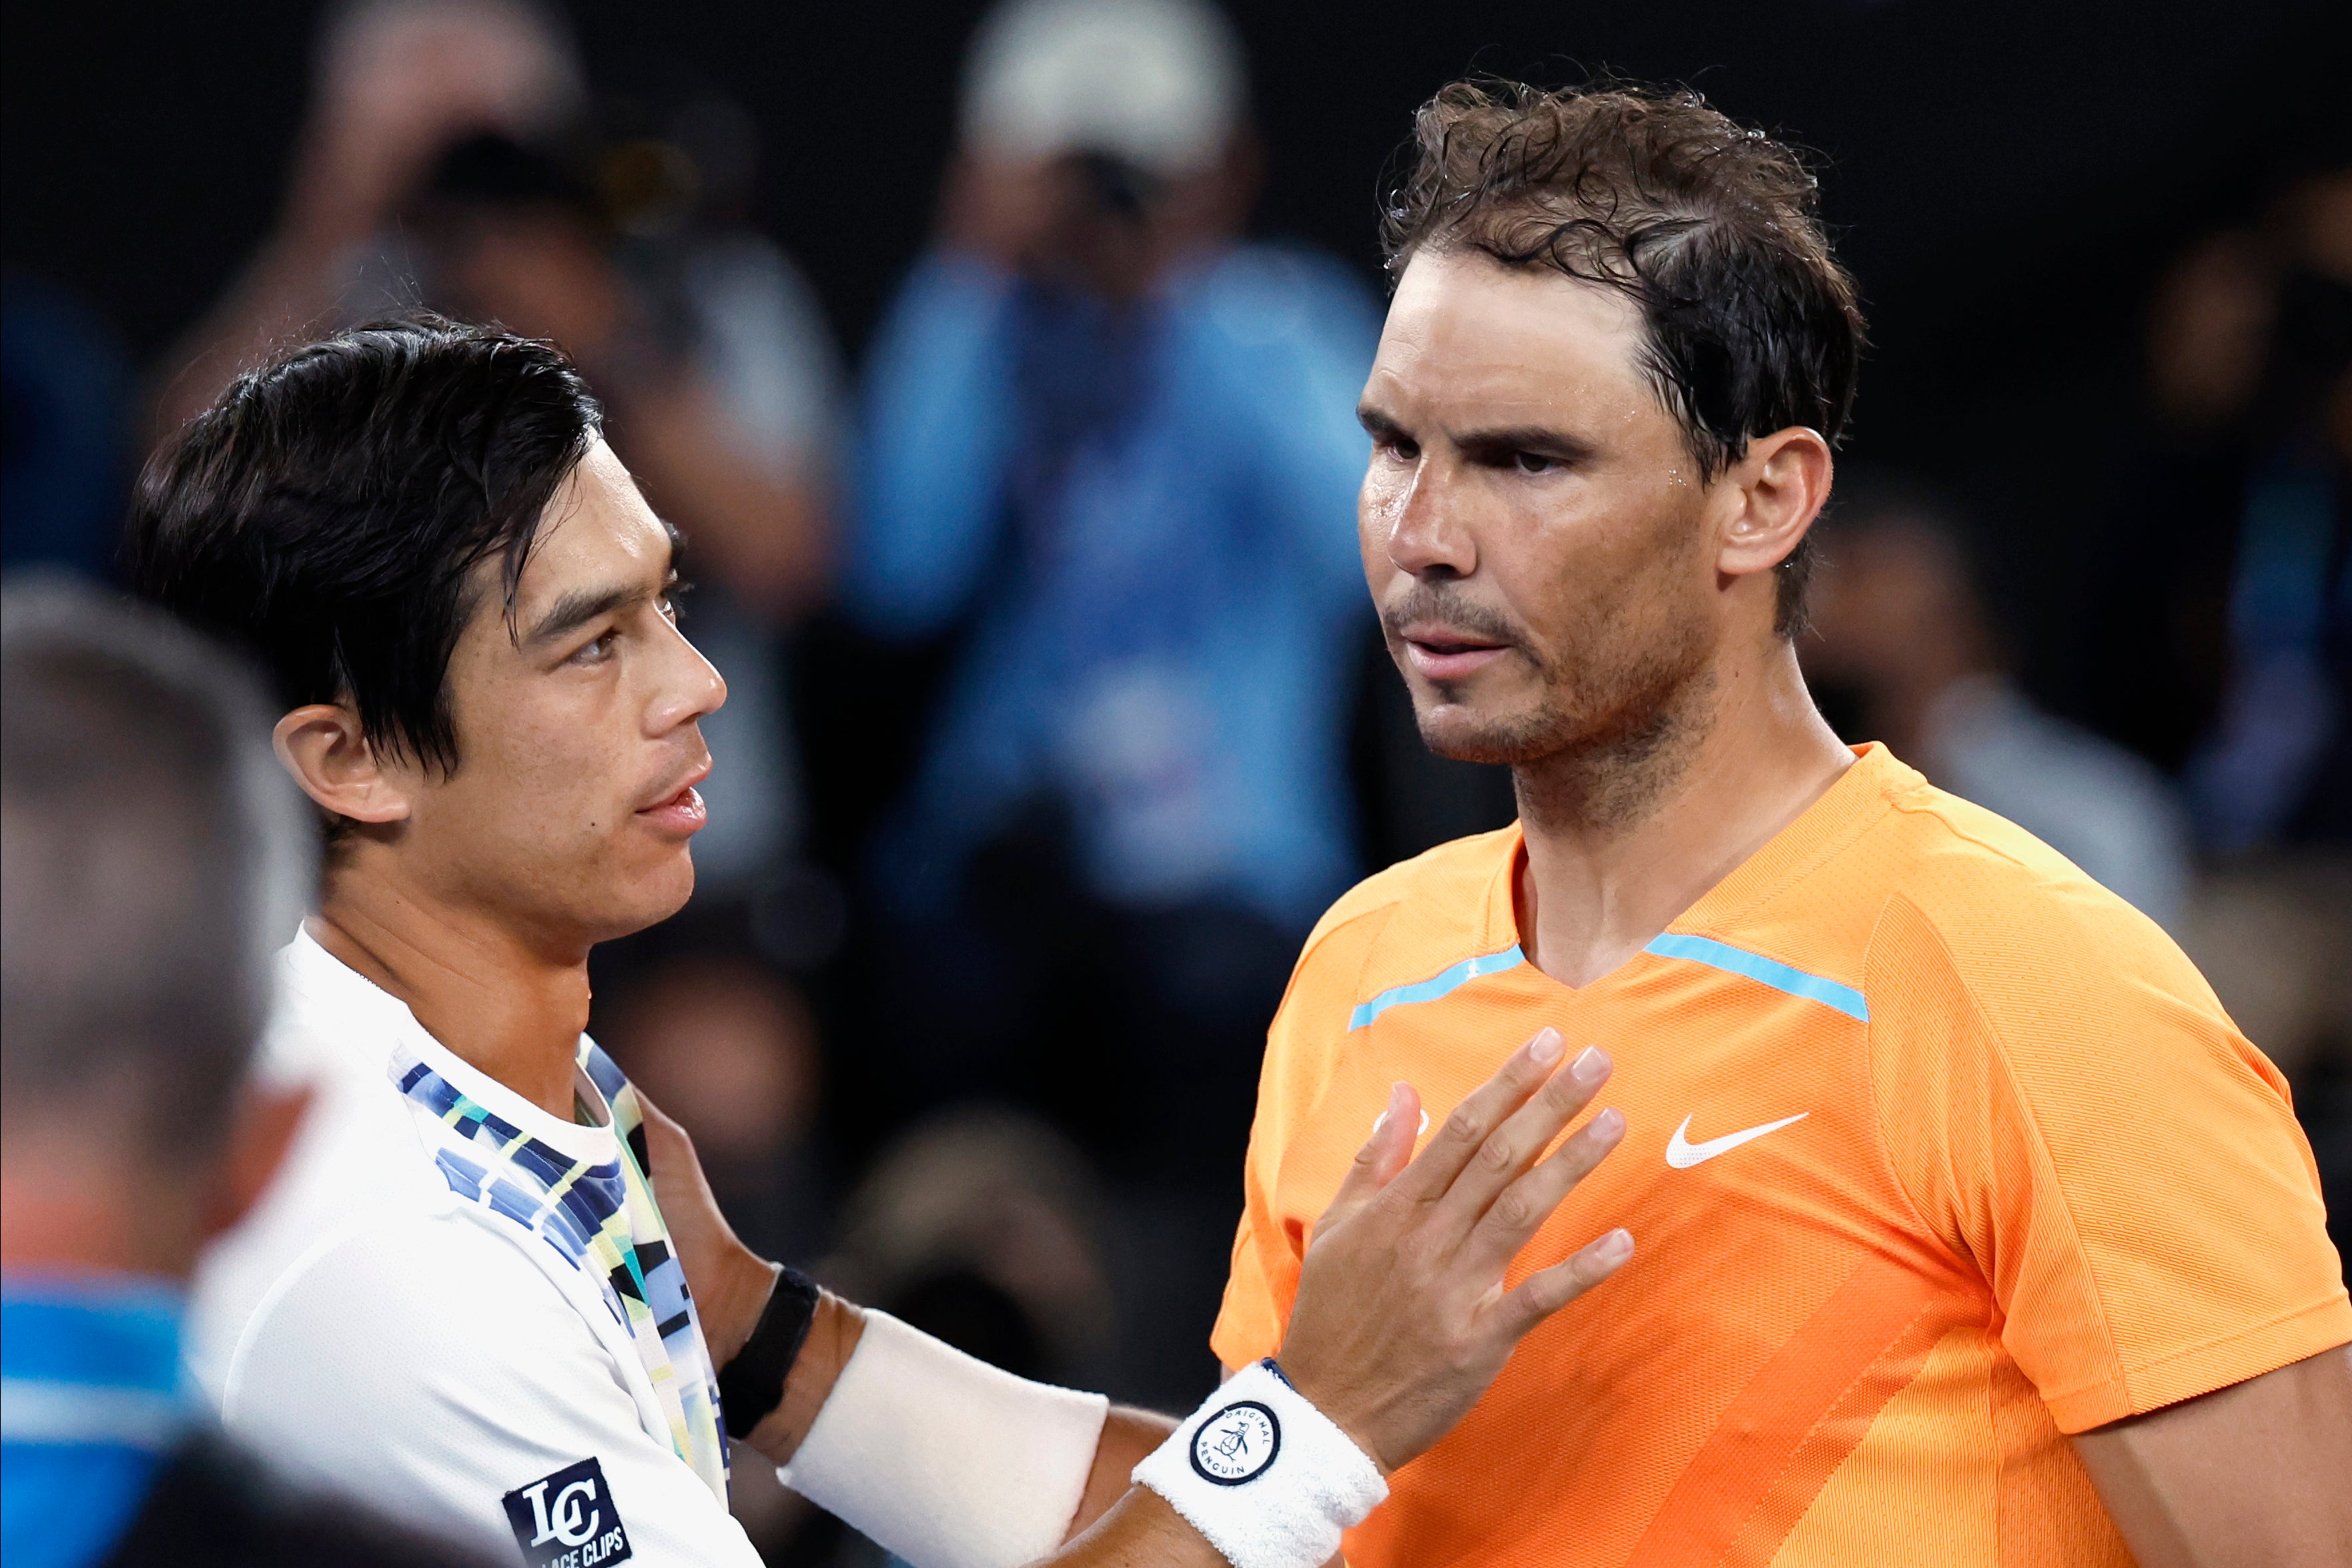 Rafael Nadal, right, of Spain congratulates Mackenzie McDonald of the U.S